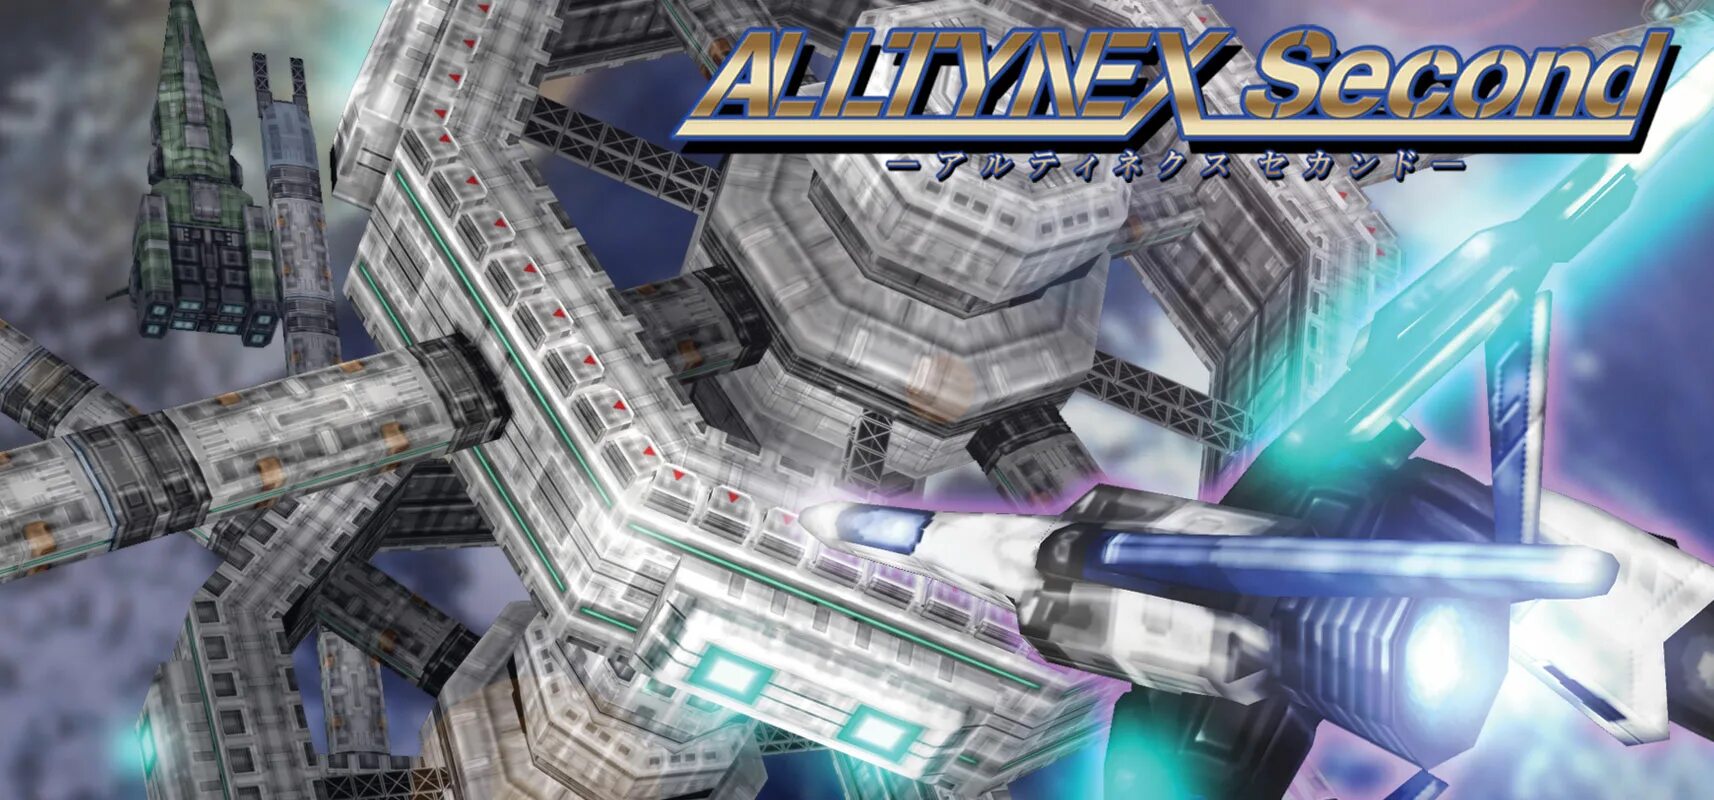 ALLTYNEX second. Amaze 2. R2d2 Steam. Key 2 game